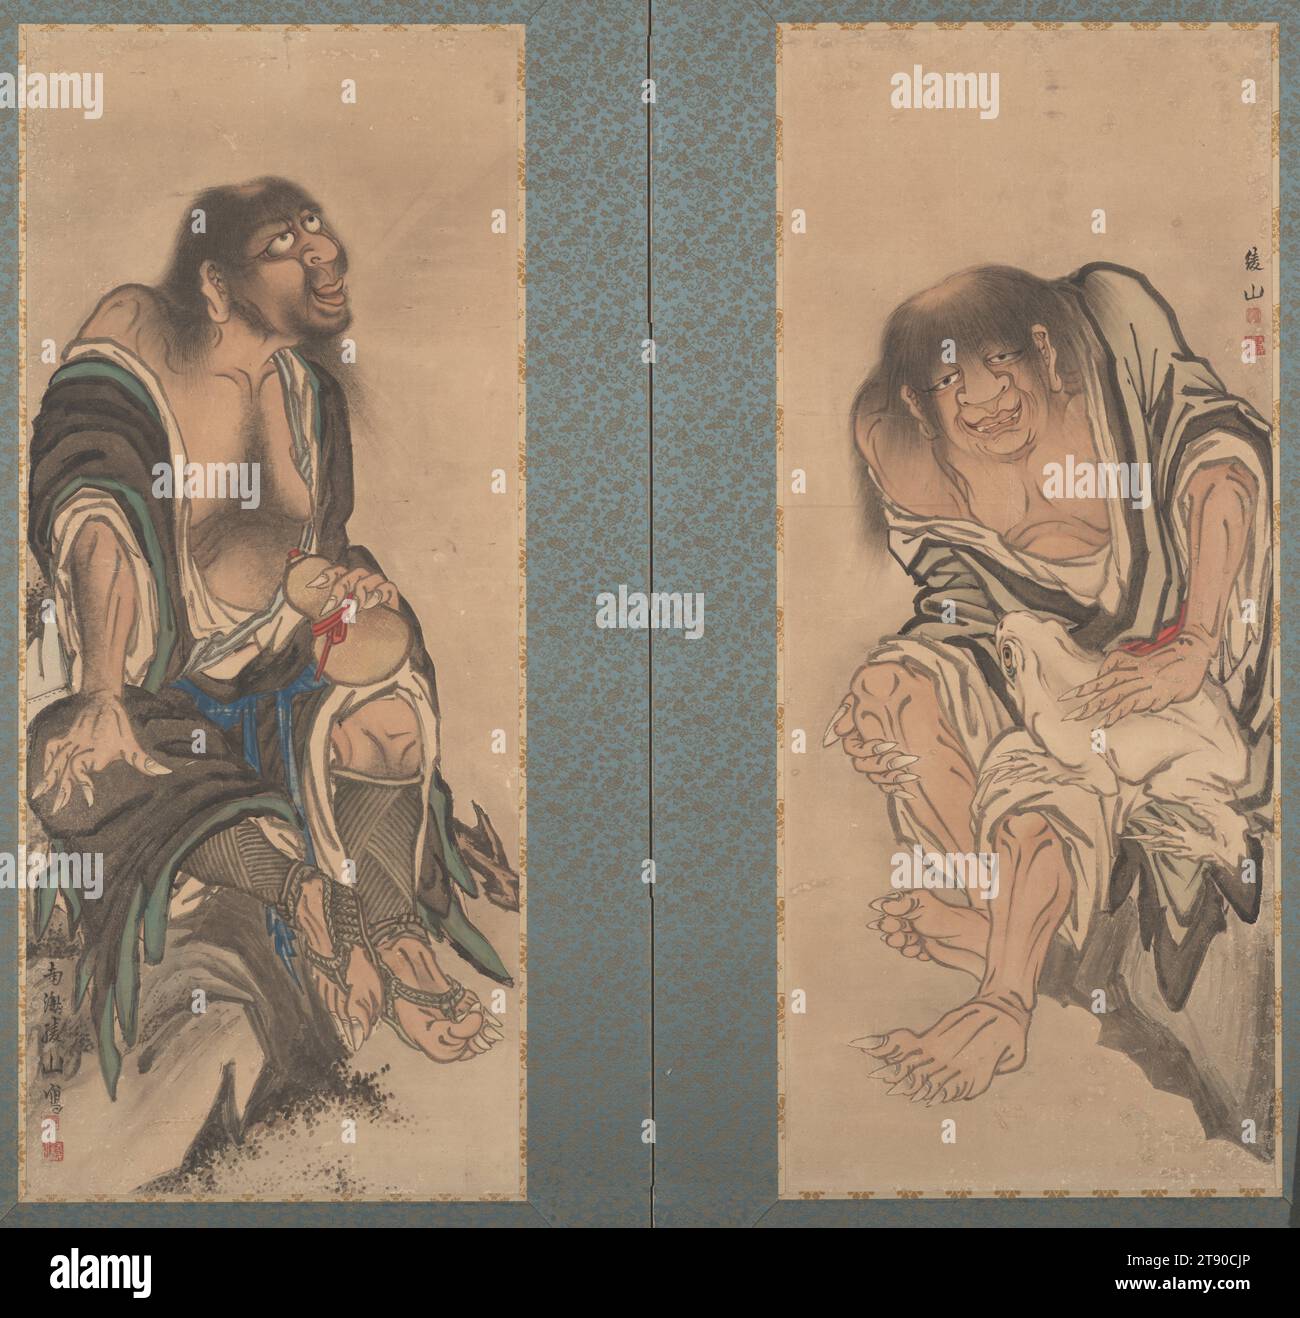 The Immortals Gama Sennin and Tekkai Sennin, early 19th century, Kuroda Ryōzan, Japanese, 1755 - 1814, 52 3/4 × 22 5/16 in. (133.99 × 56.67 cm) (image, L screen)52 13/16 × 22 5/16 in. (134.14 × 56.67 cm) (image, R screen)66 3/4 × 69 5/8 × 11/16 in. (169.55 × 176.85 × 1.75 cm) (mount), Two-panel folding screen; ink and light colors on paper, Japan, 19th century, This two-panel screen depicts the Daoist immortals, Gama Sennin (Chin. Liu Hai) and Tekkai Sennin (Chin. Li Tieguai). The two were often paired in Japanese and Chinese art because of their corresponding supernatural powers. Stock Photo